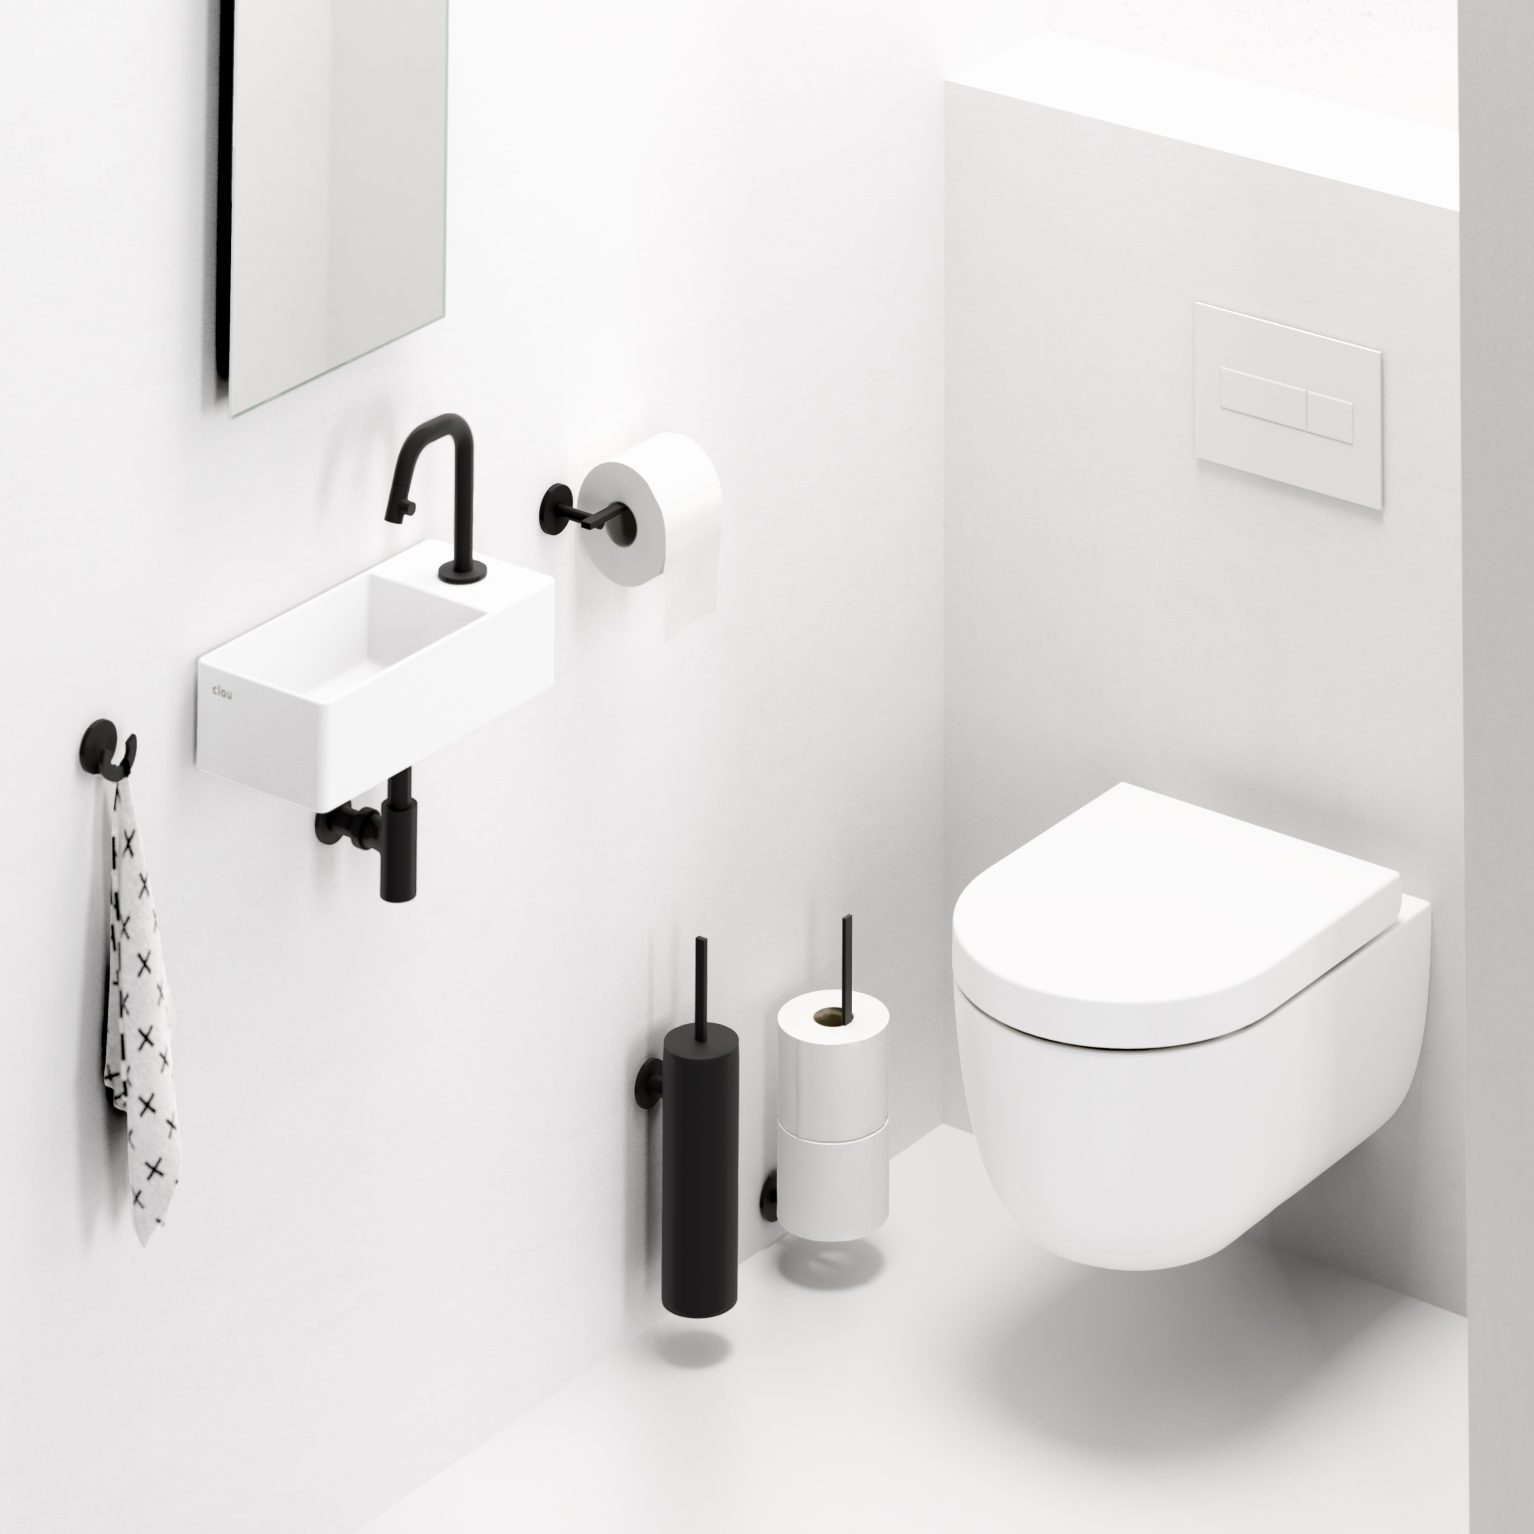 toilet-borstel-garnituur-reserve-rolhouder-haakje-sifon-kraan-fontein-wasbakje-wand-accessoires-mat-zwart-toilet-badkamer-luxe-sanitair-Flat-clou-CL090204121-wc-borstel